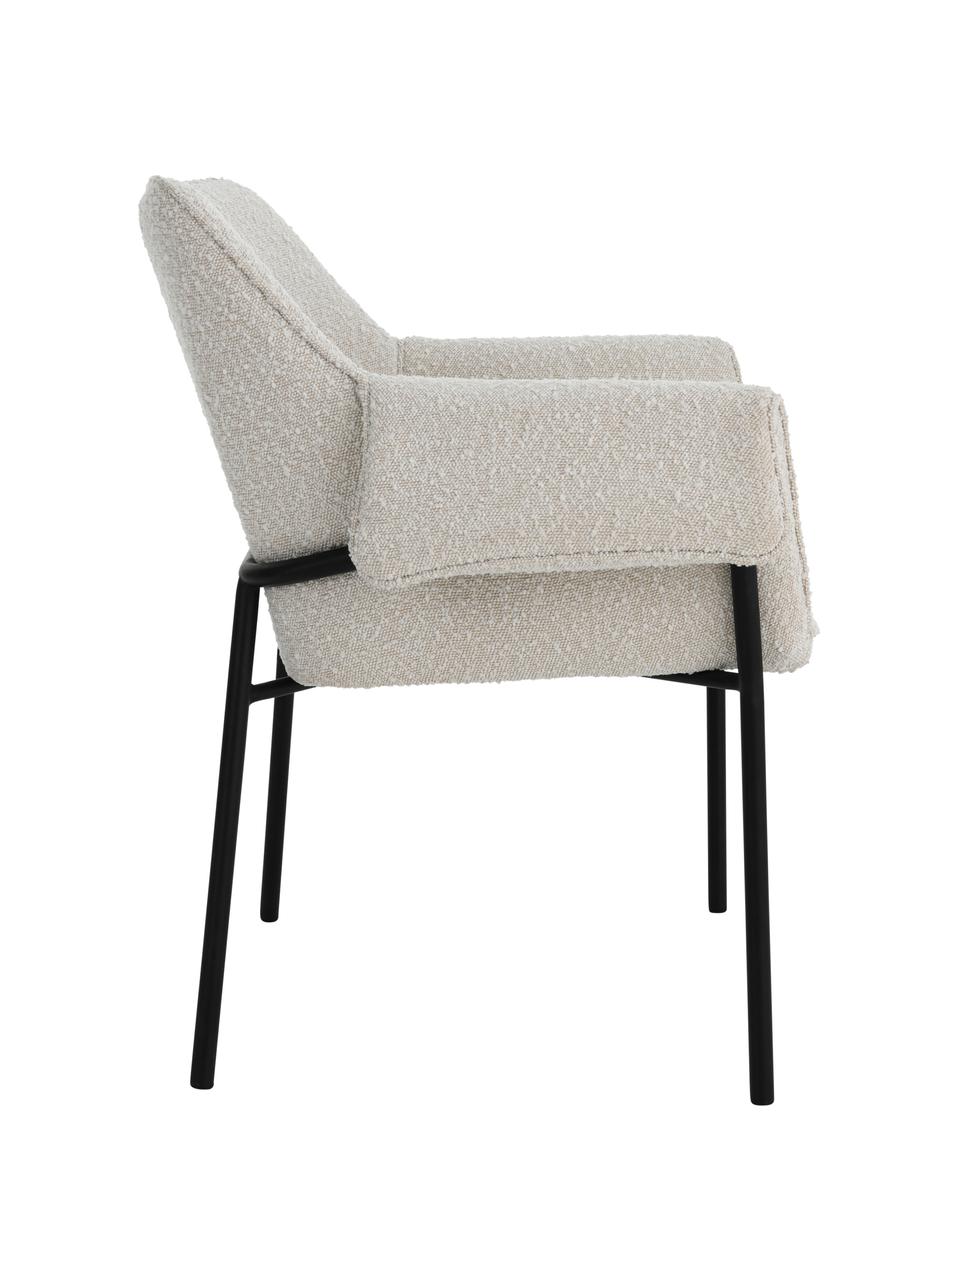 Chaise à accoudoirs tissu bouclé blanc Effekt, 2 pièces, Tissu bouclé blanc, larg. 73 x prof. 54 cm